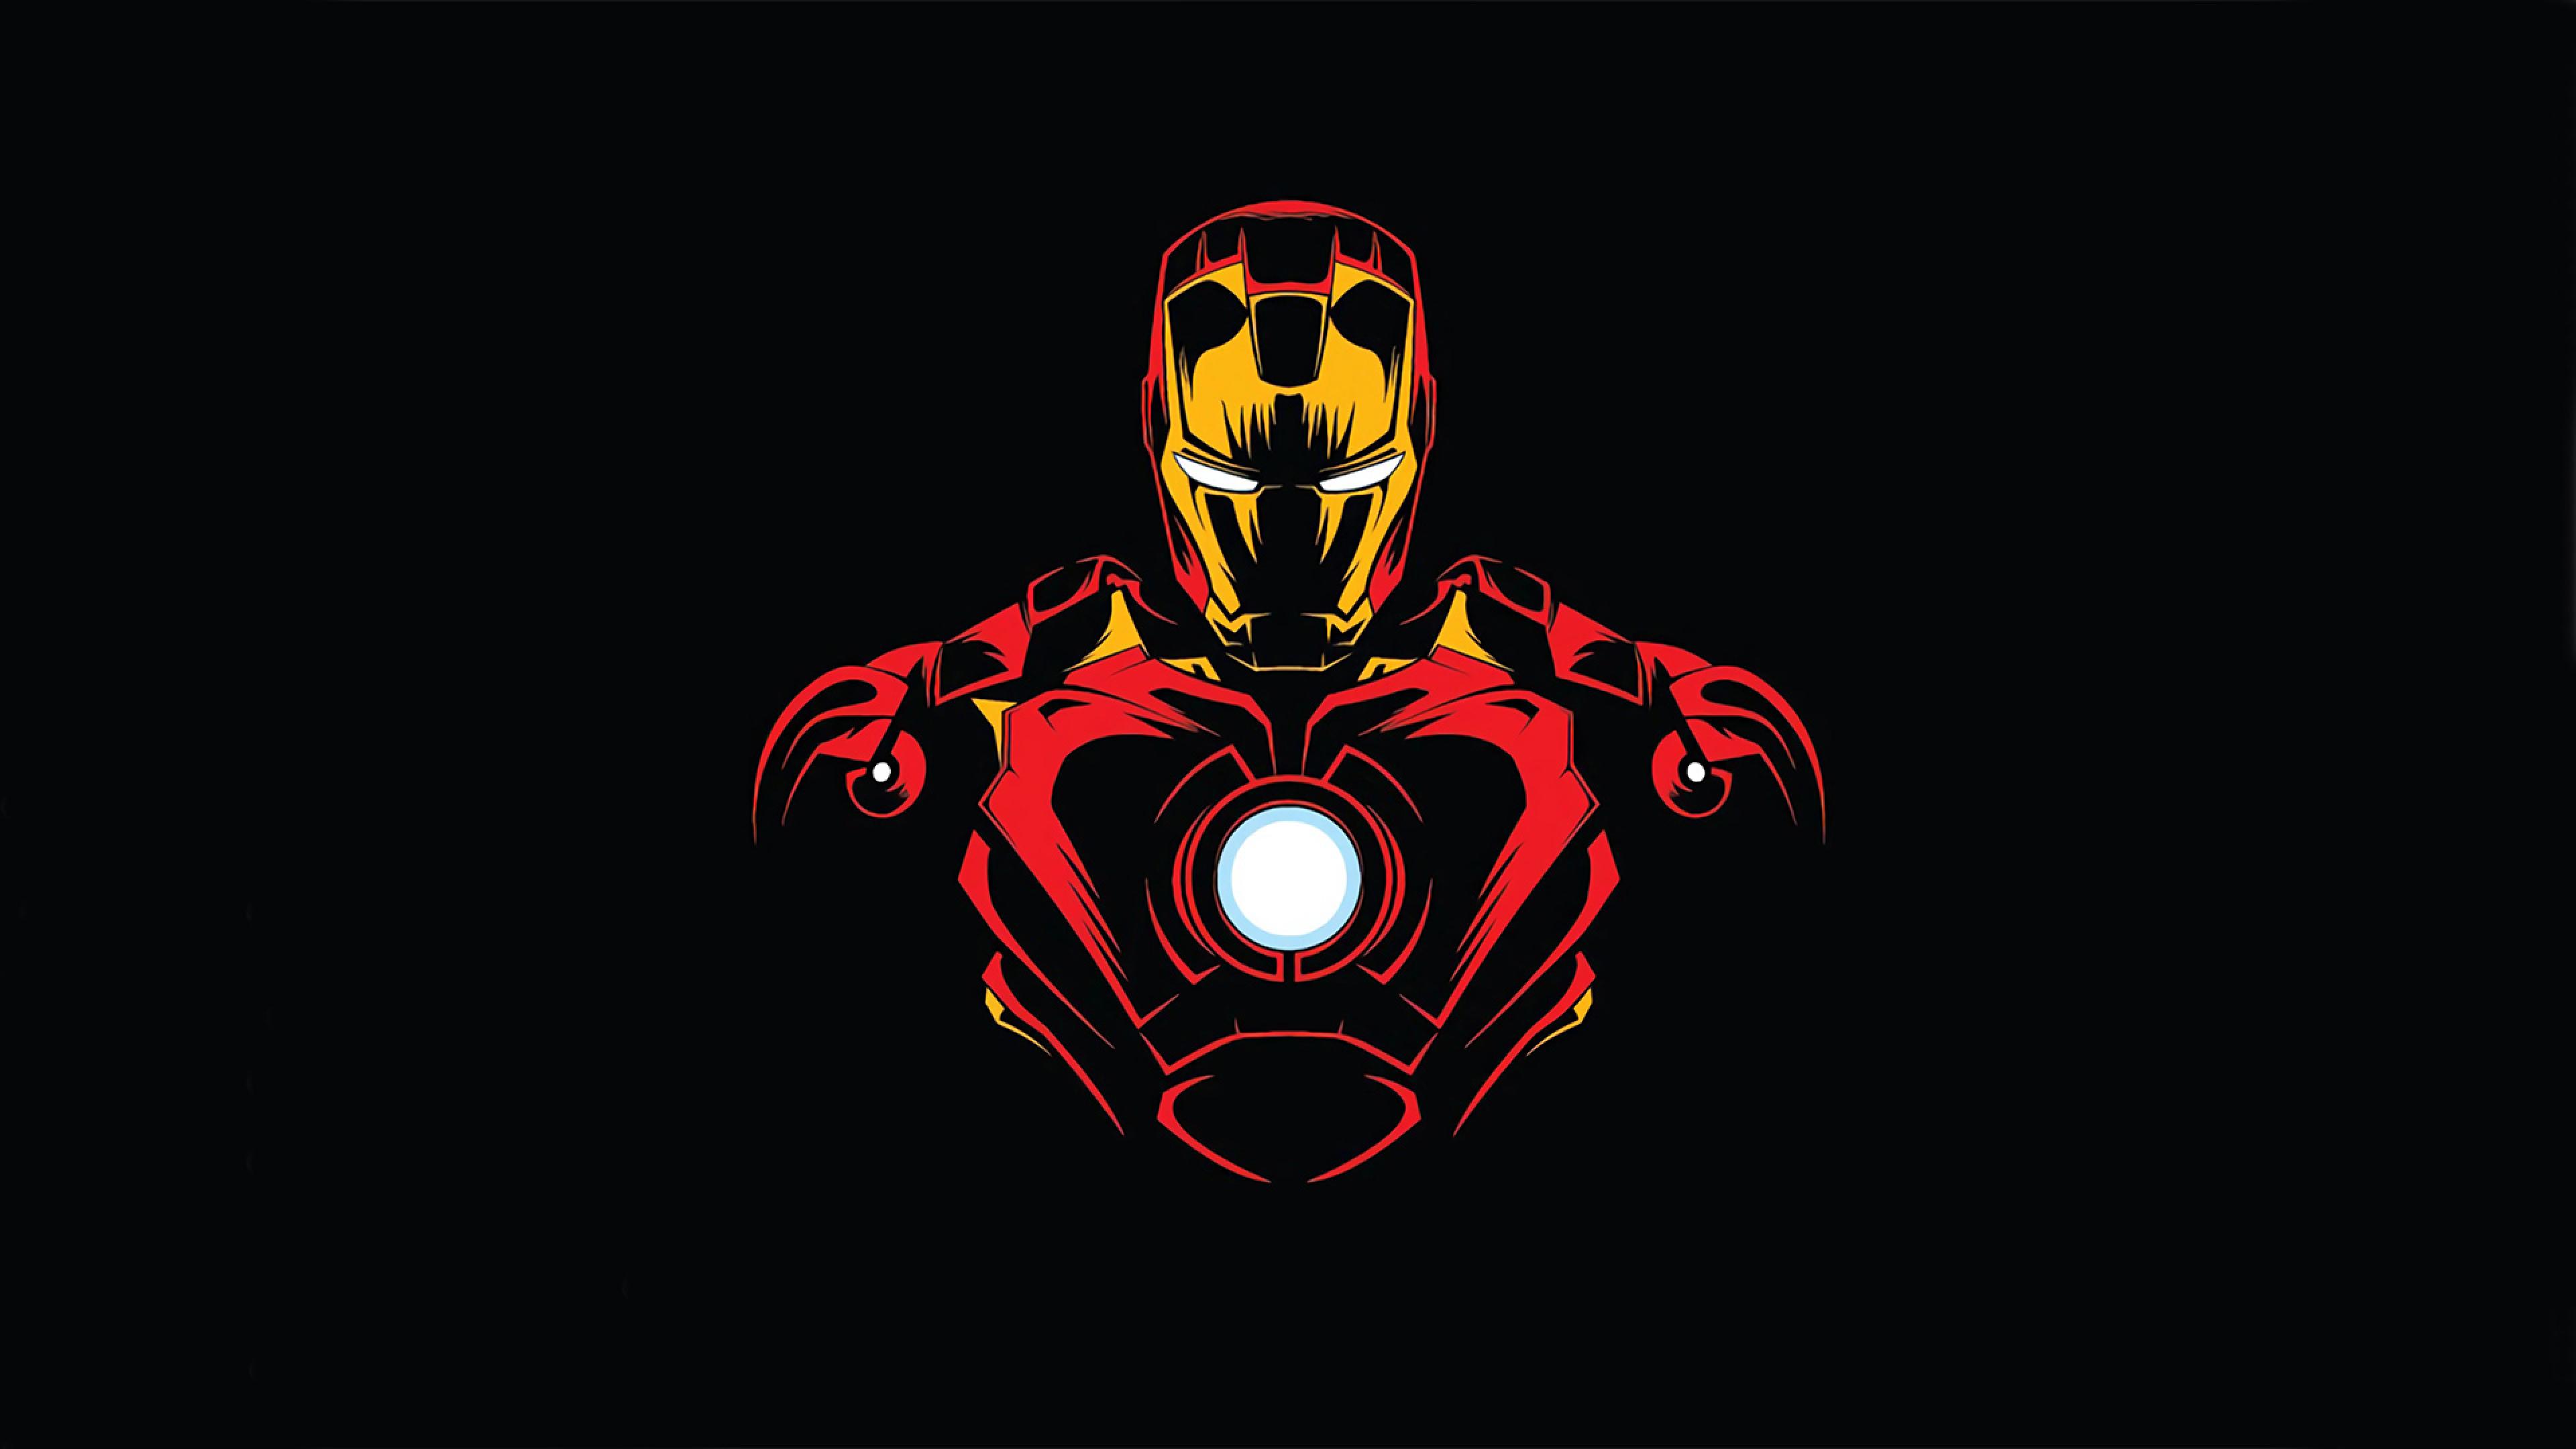 Iron Man Minimalist 4K Wallpaper, HD Superheroes 4K Wallpaper, Image, Photo and Background